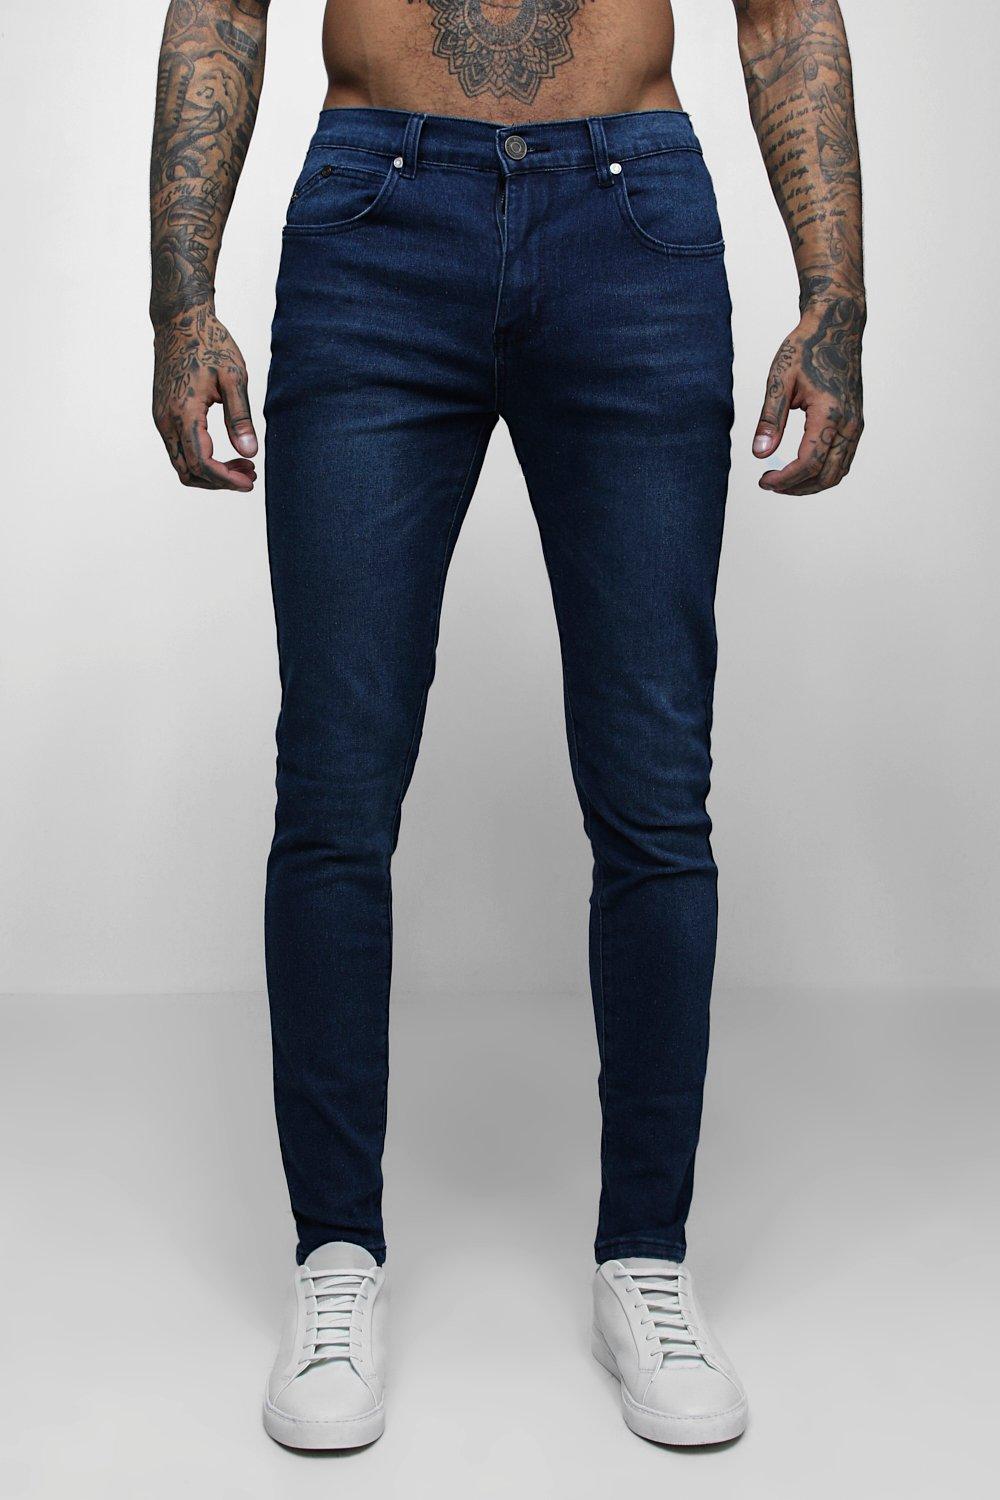 jeans blue denim